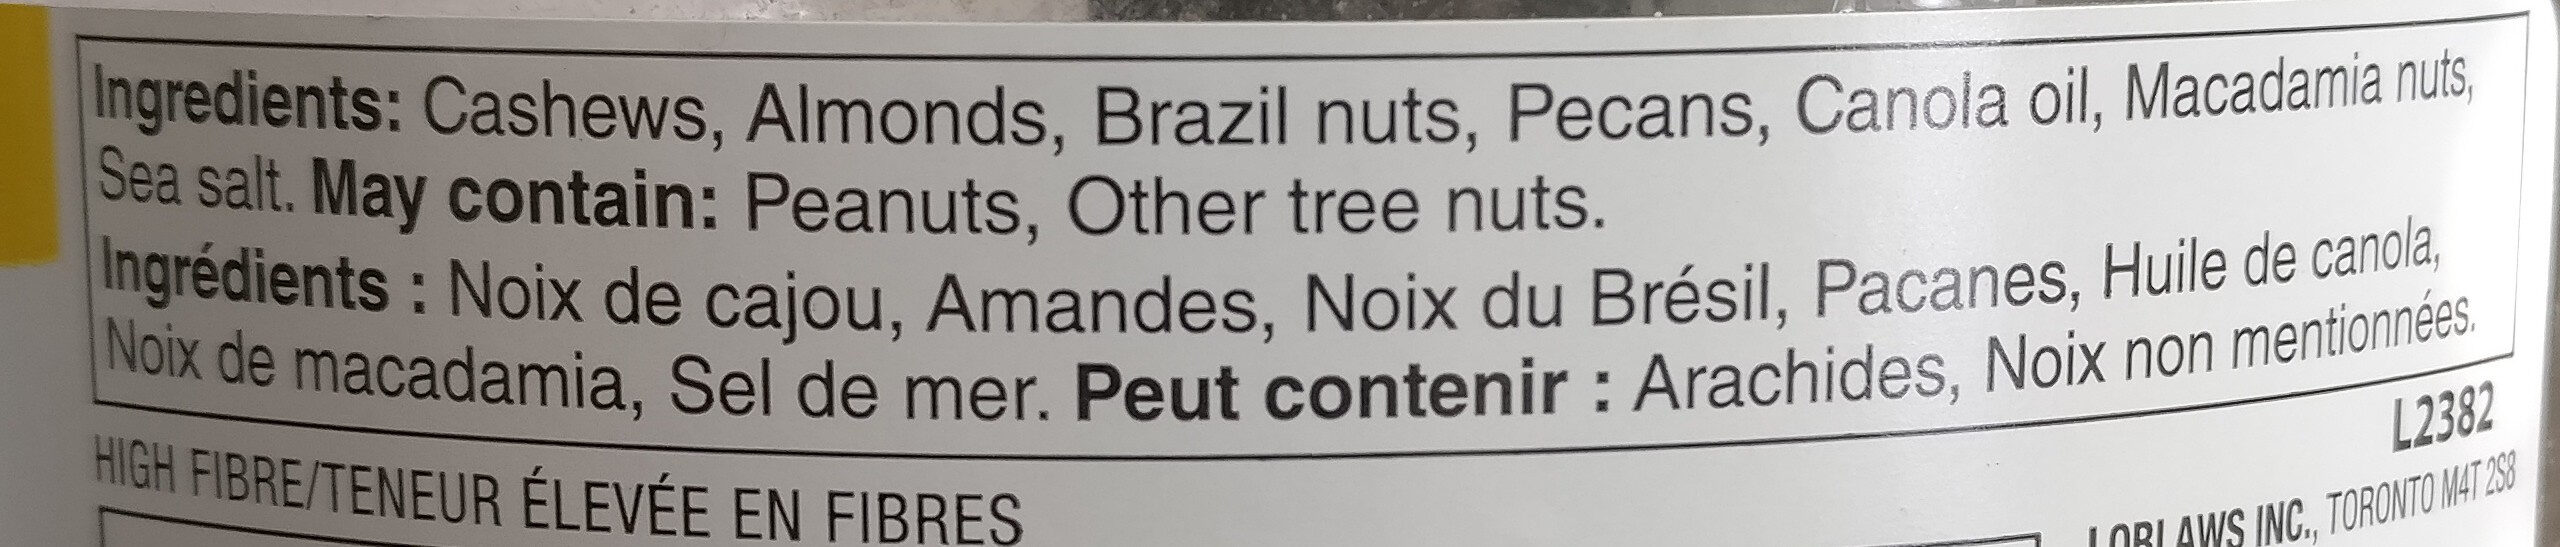 Deluxe mixed nuts - Ingredients